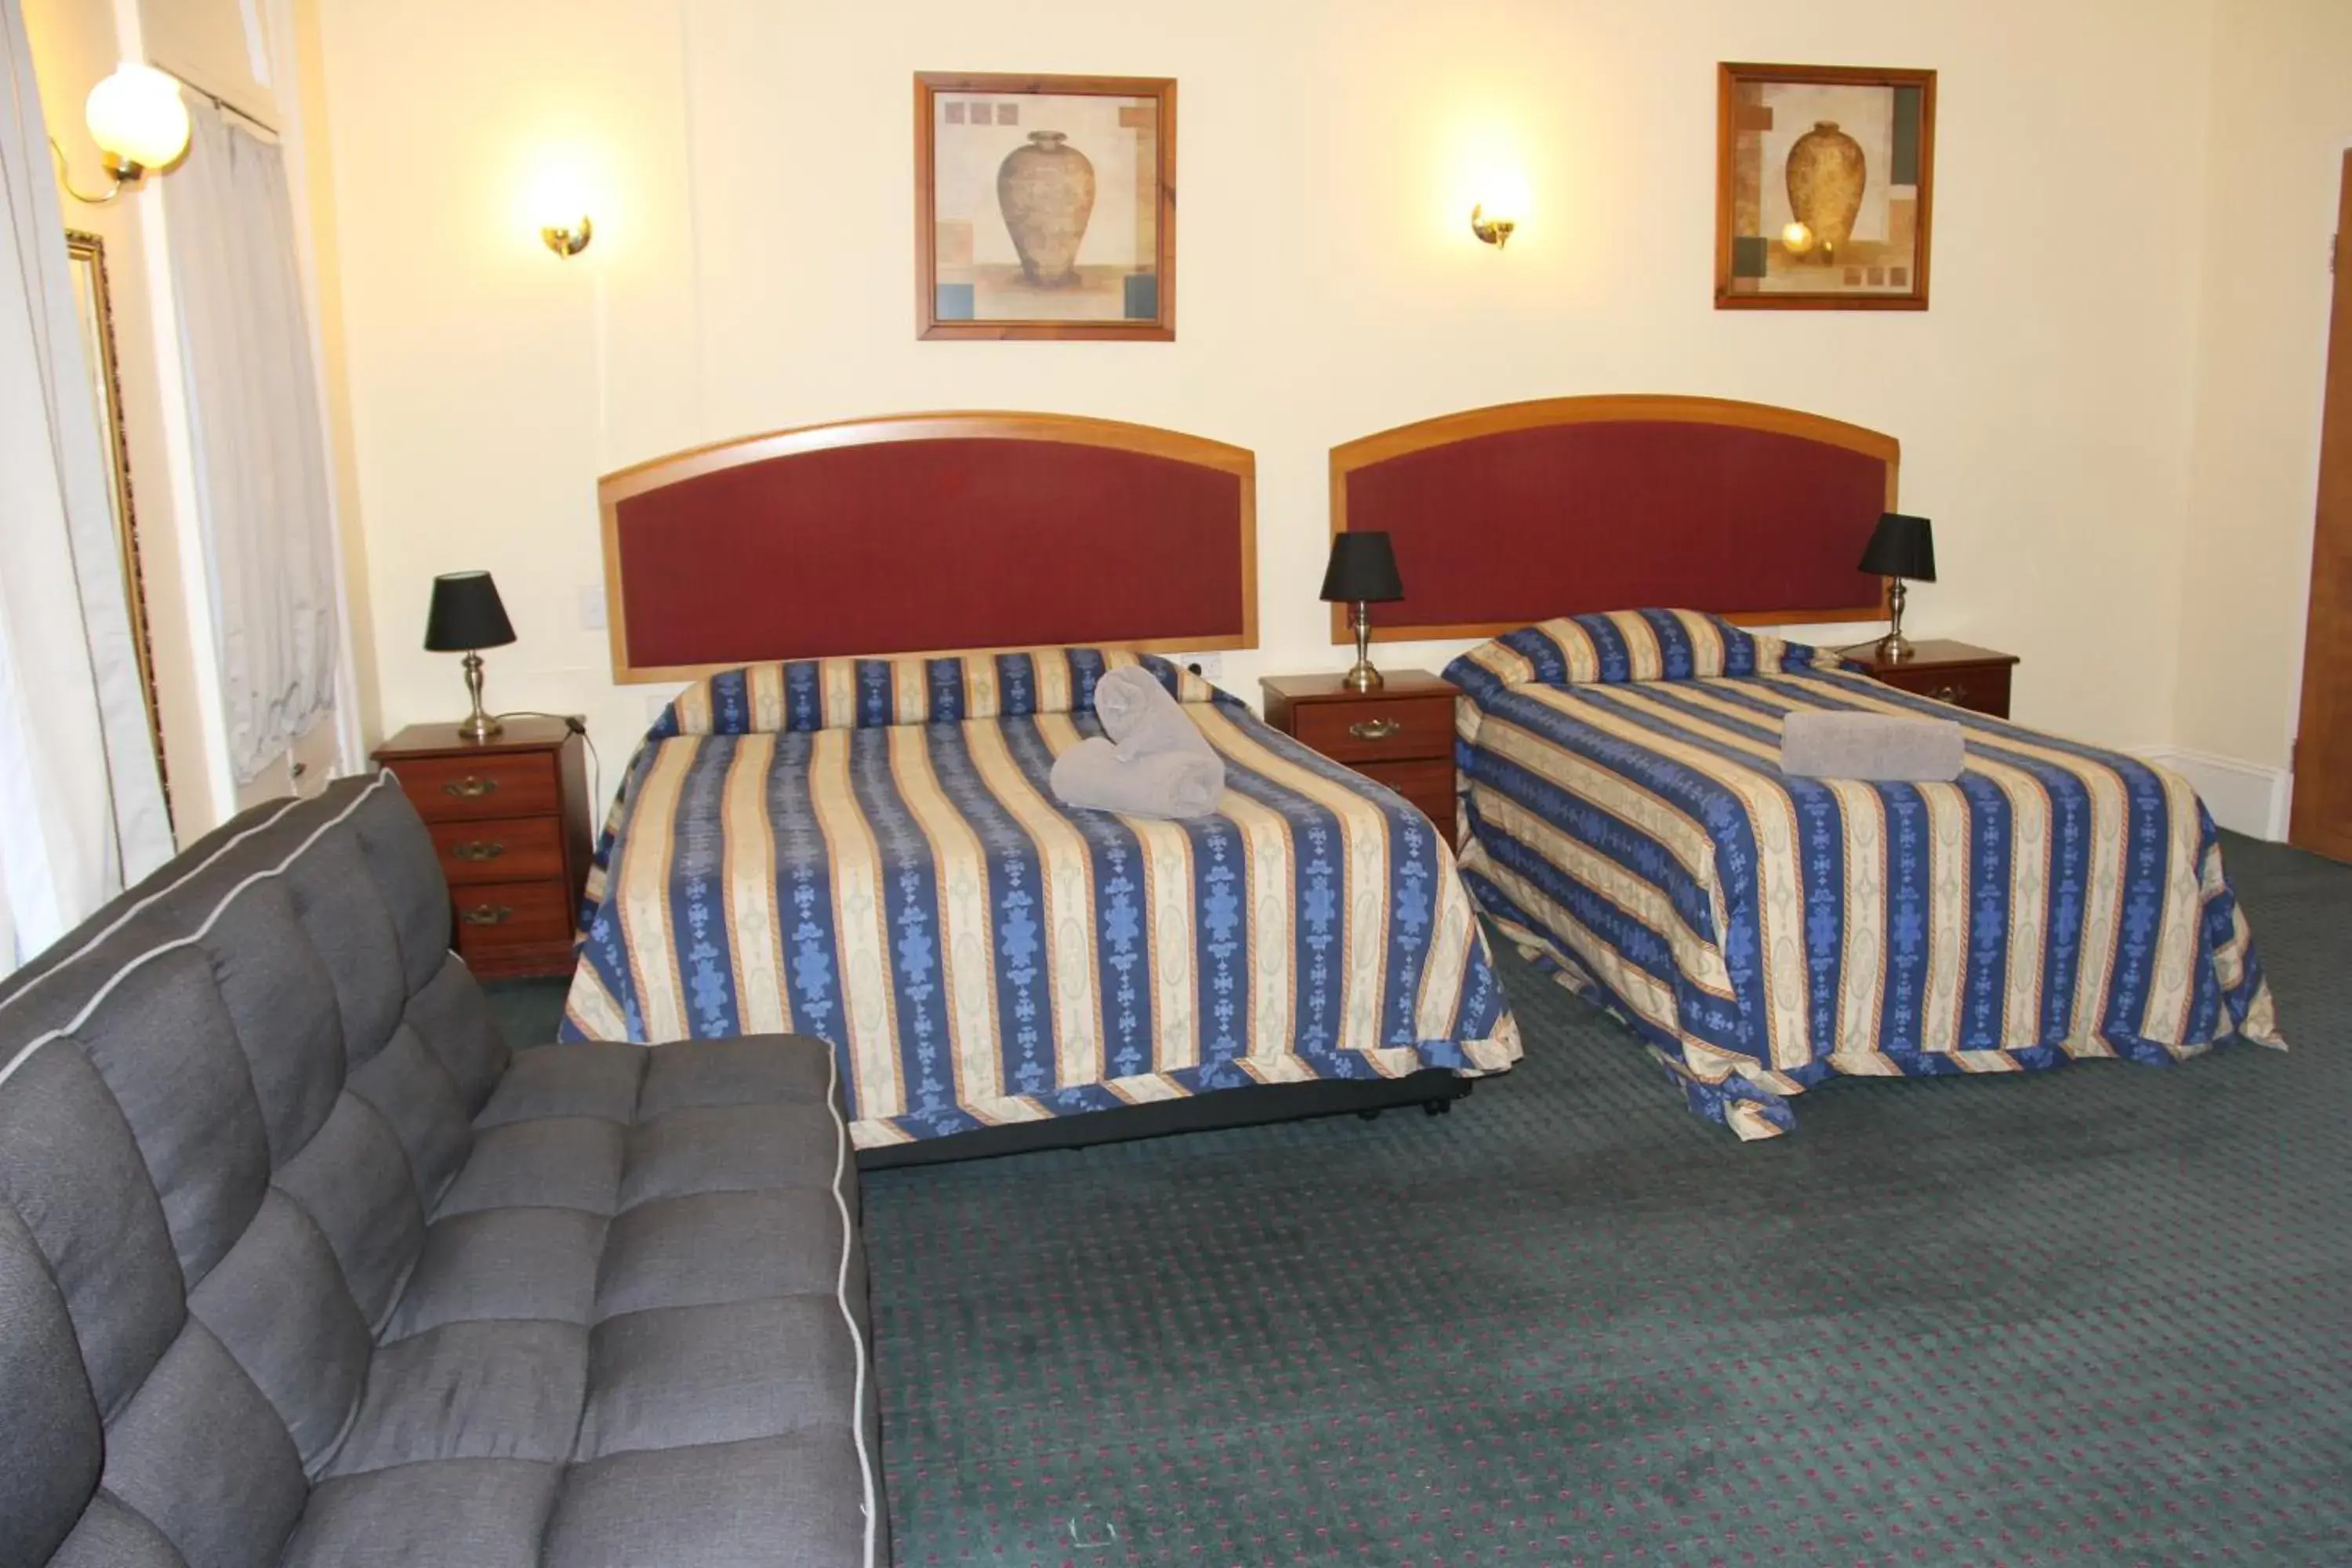 Bed, Room Photo in Alpine Heritage Motel